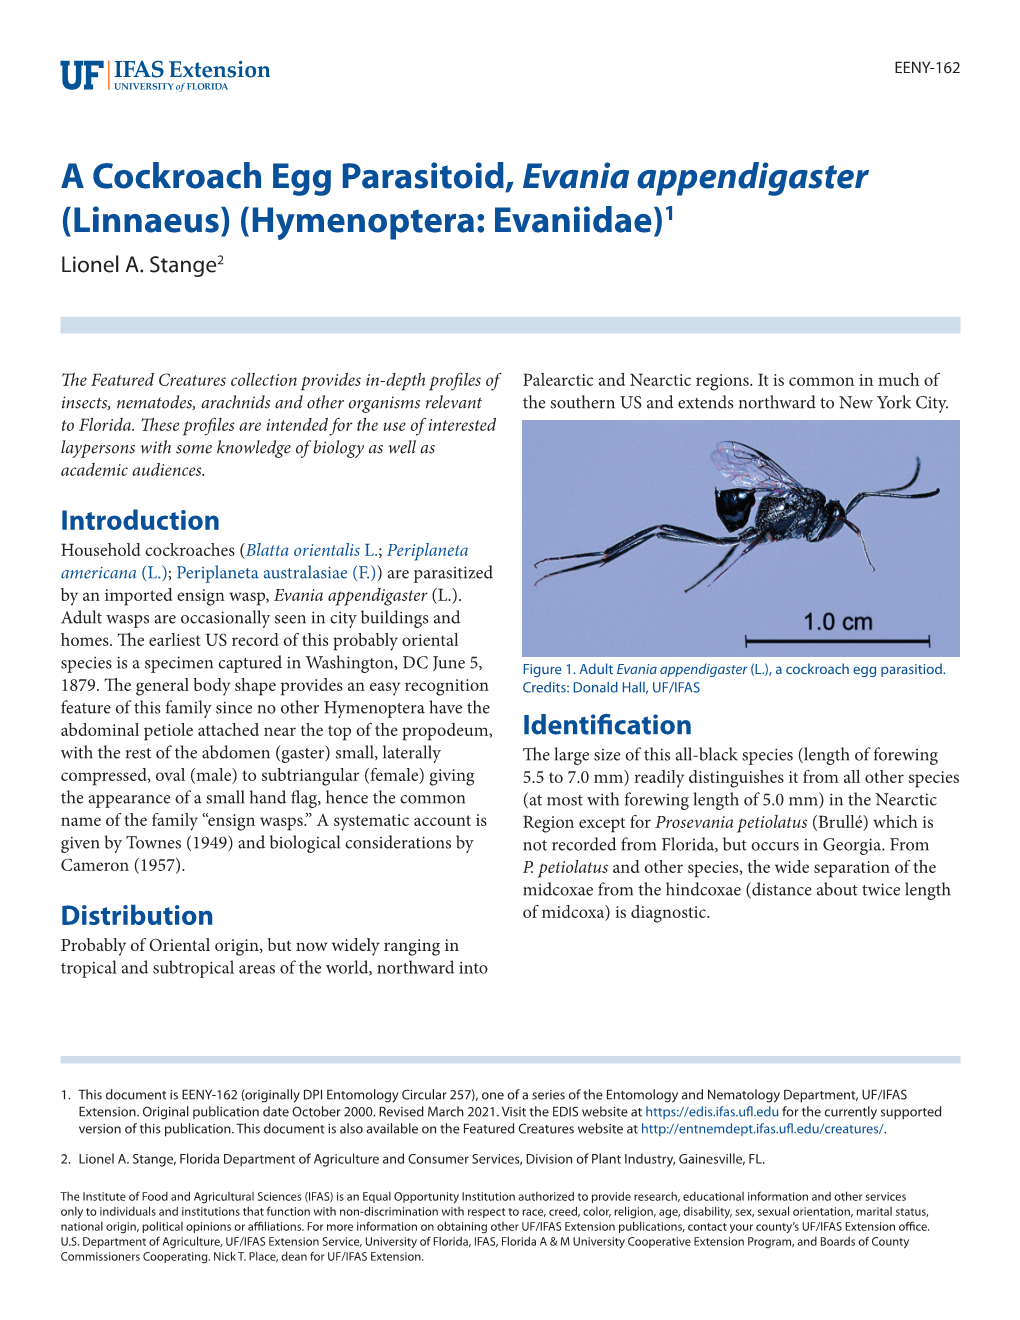 A Cockroach Egg Parasitoid, Evania Appendigaster (Linnaeus) (Hymenoptera: Evaniidae)1 Lionel A